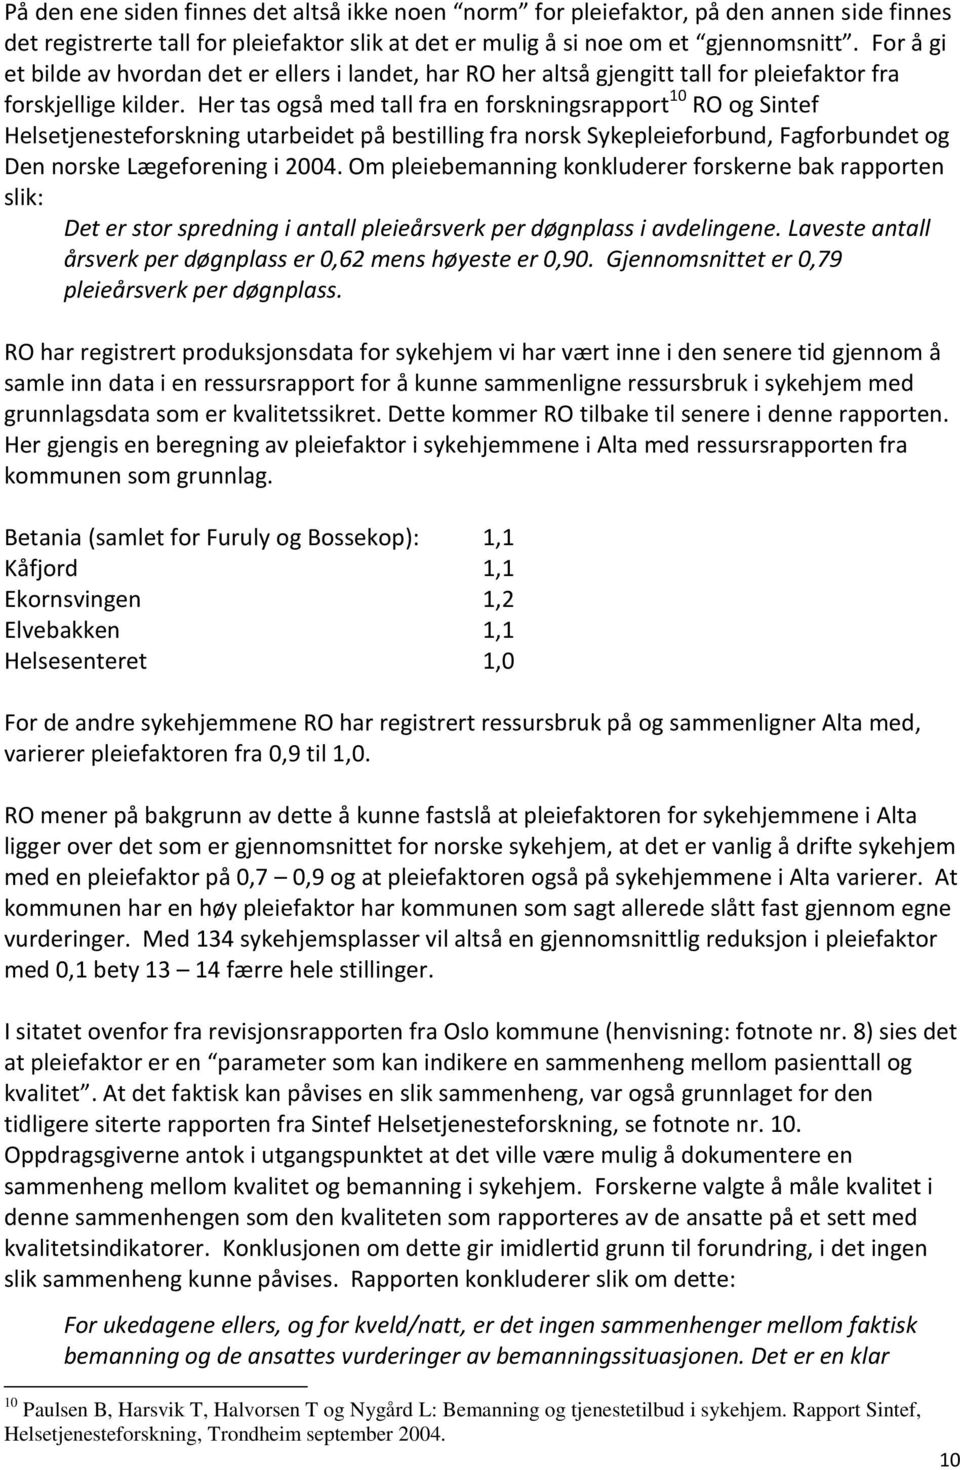 Her tas også med tall fra en forskningsrapport 10 RO og Sintef Helsetjenesteforskning utarbeidet på bestilling fra norsk Sykepleieforbund, Fagforbundet og Den norske Lægeforening i 2004.